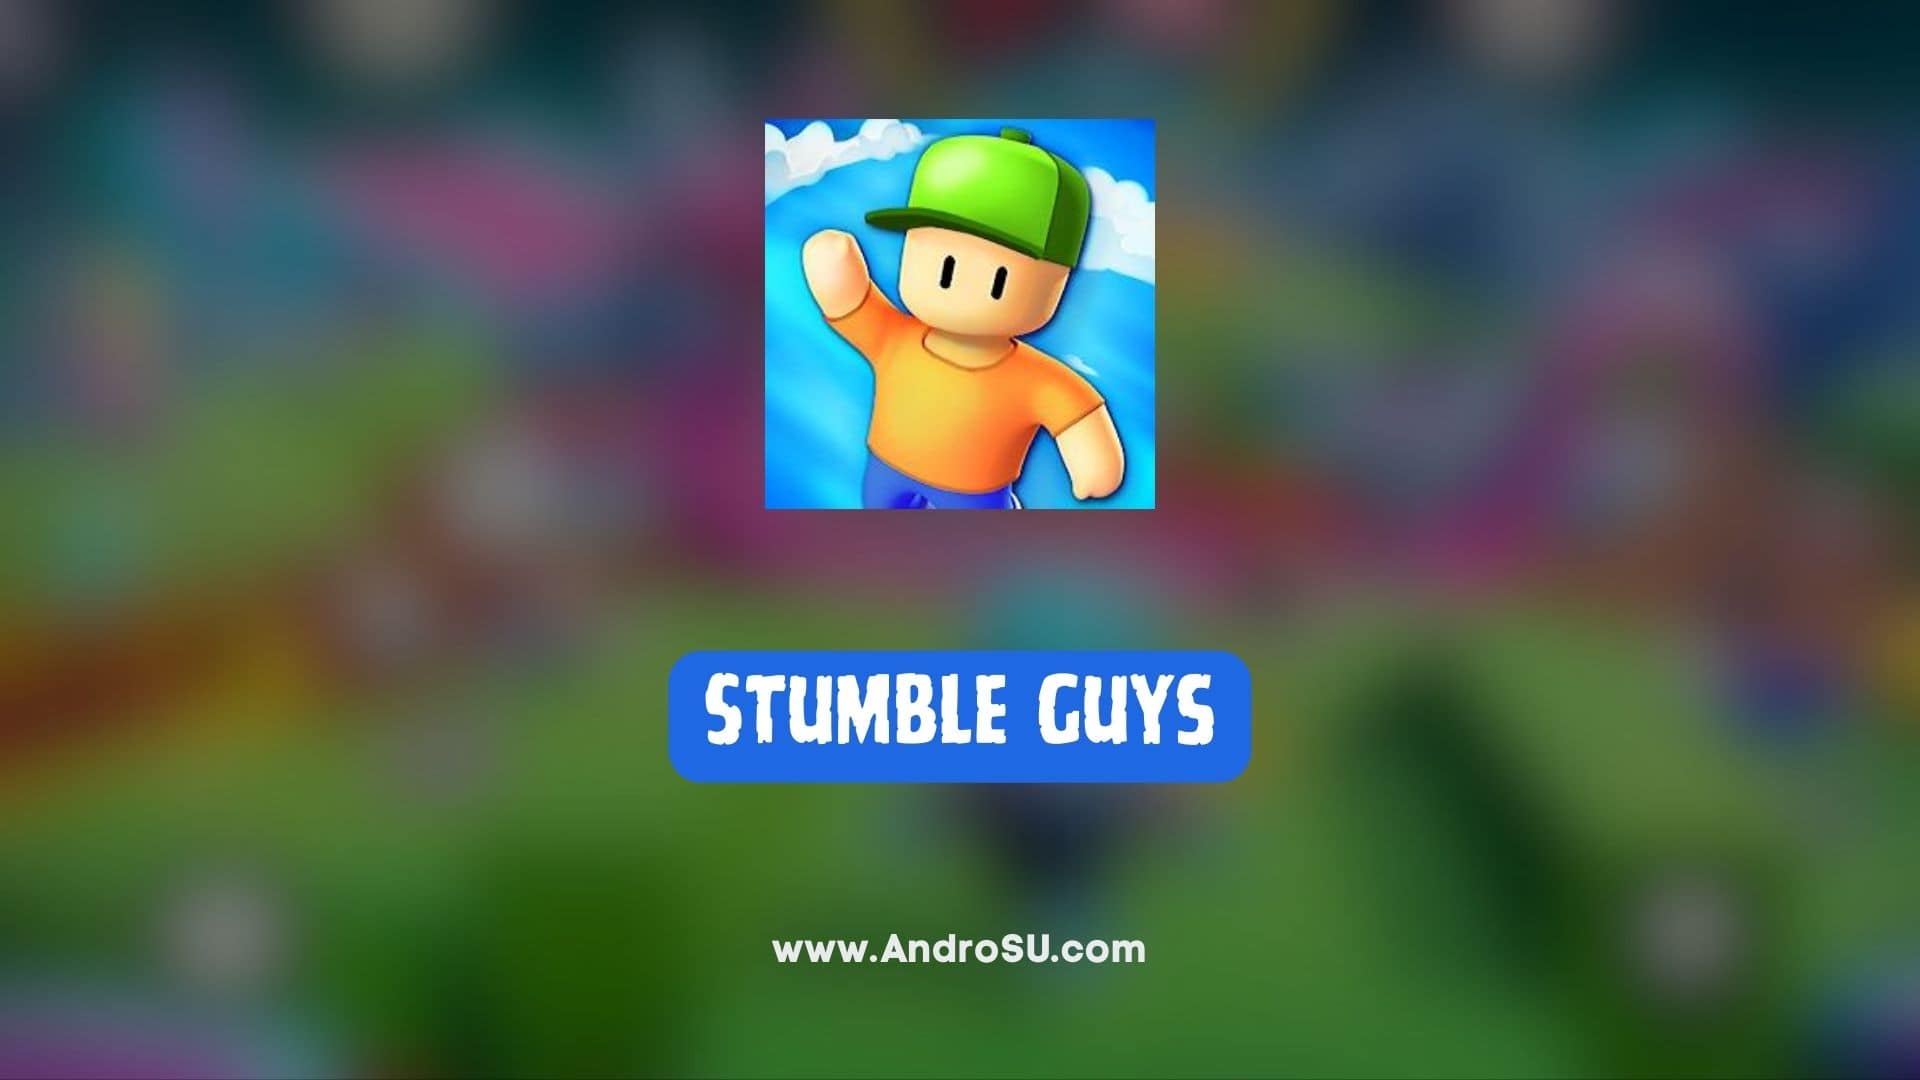 Stumble Guys Beta APK (New Version) v0.62.0 Free Download